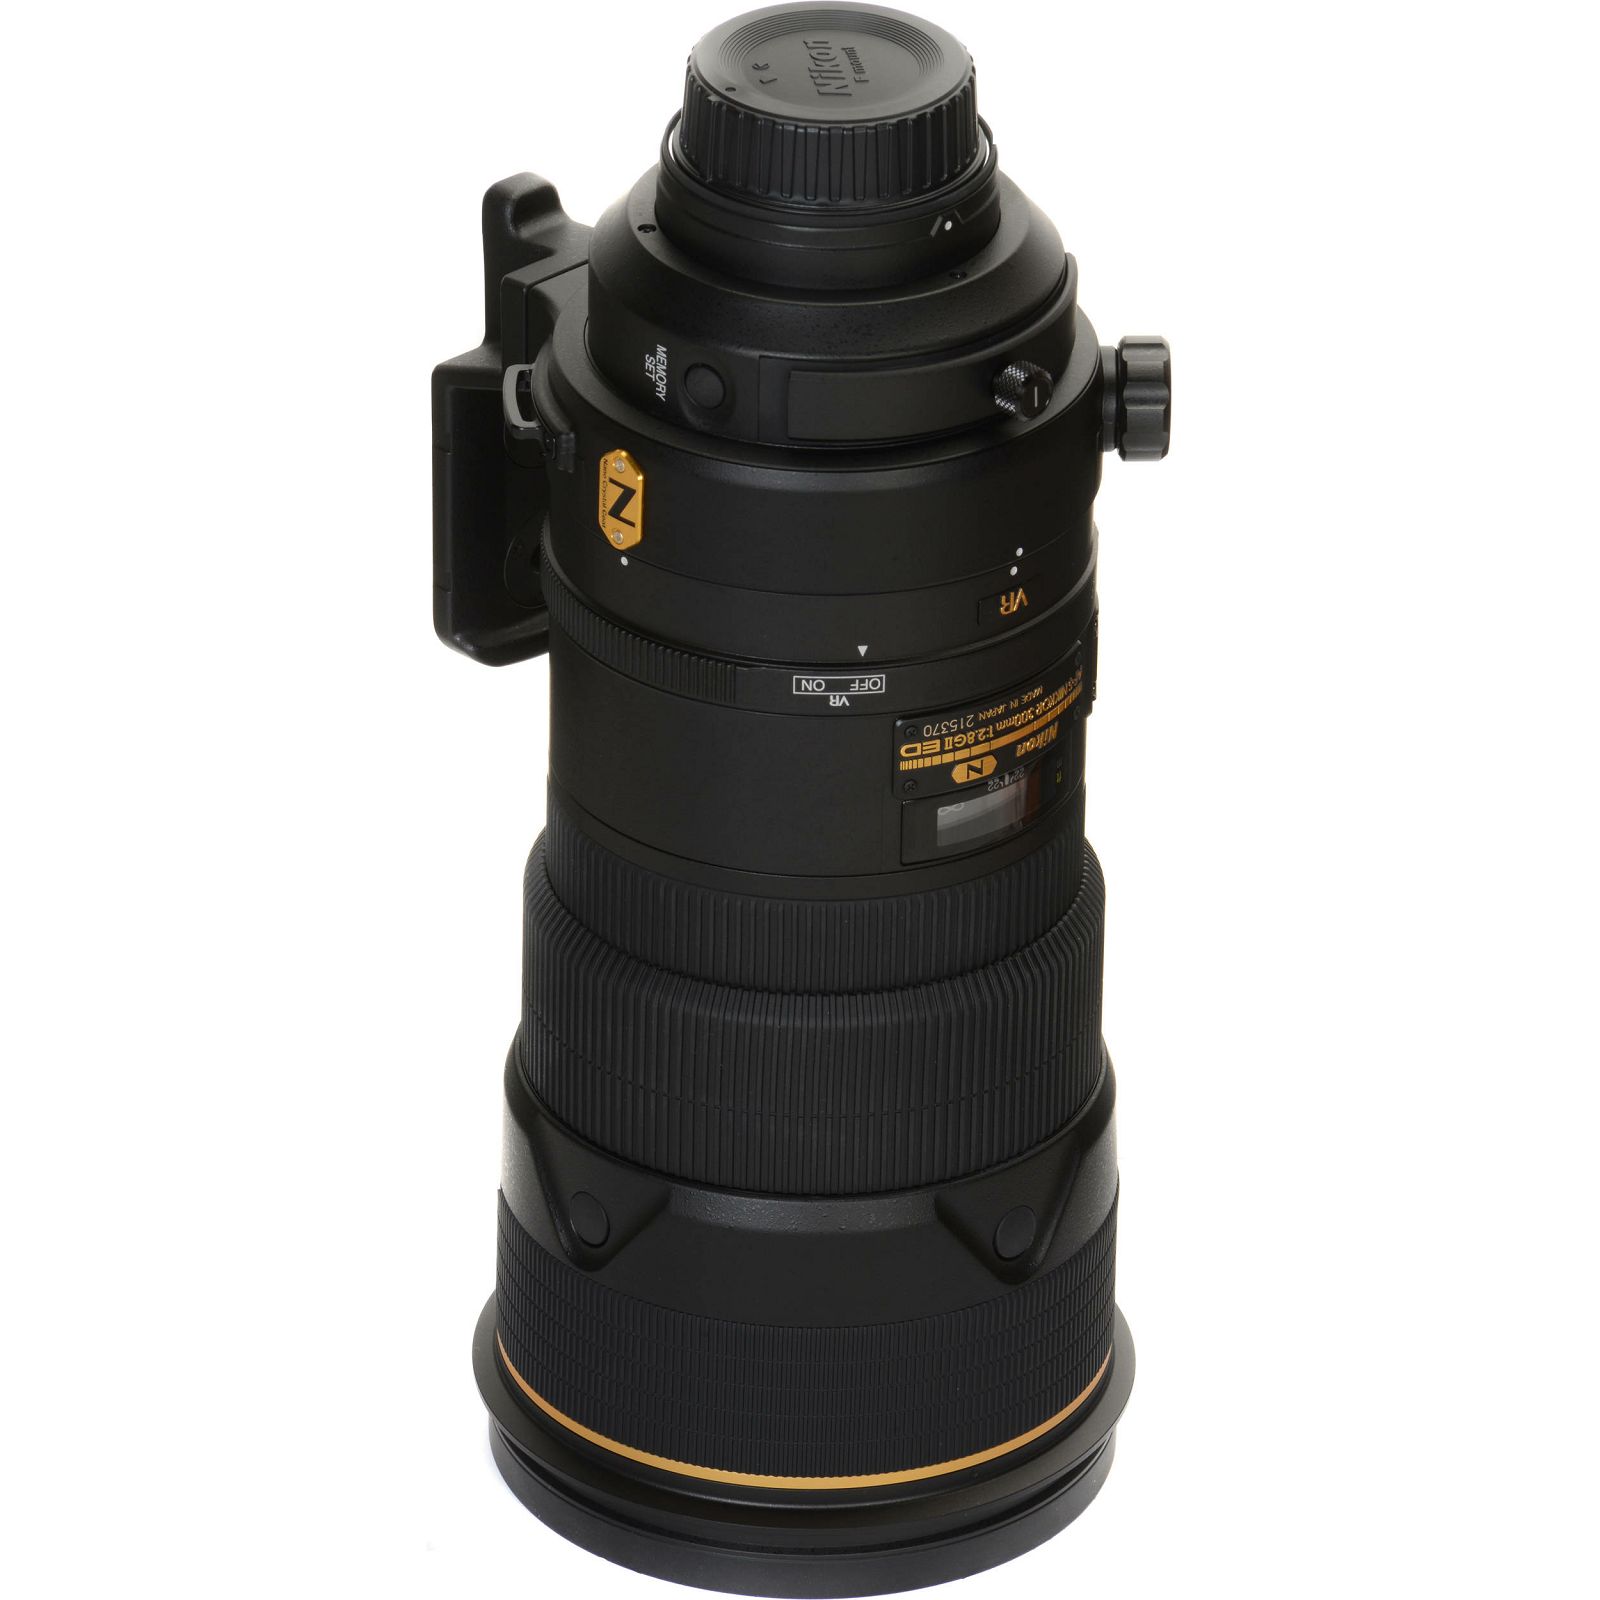 Nikon AF-S 300mm f/2.8G ED VR II telefoto objektiv Nikkor 300 F2.8 2.8 G Professional auto focus prime lens (JAA339DA)